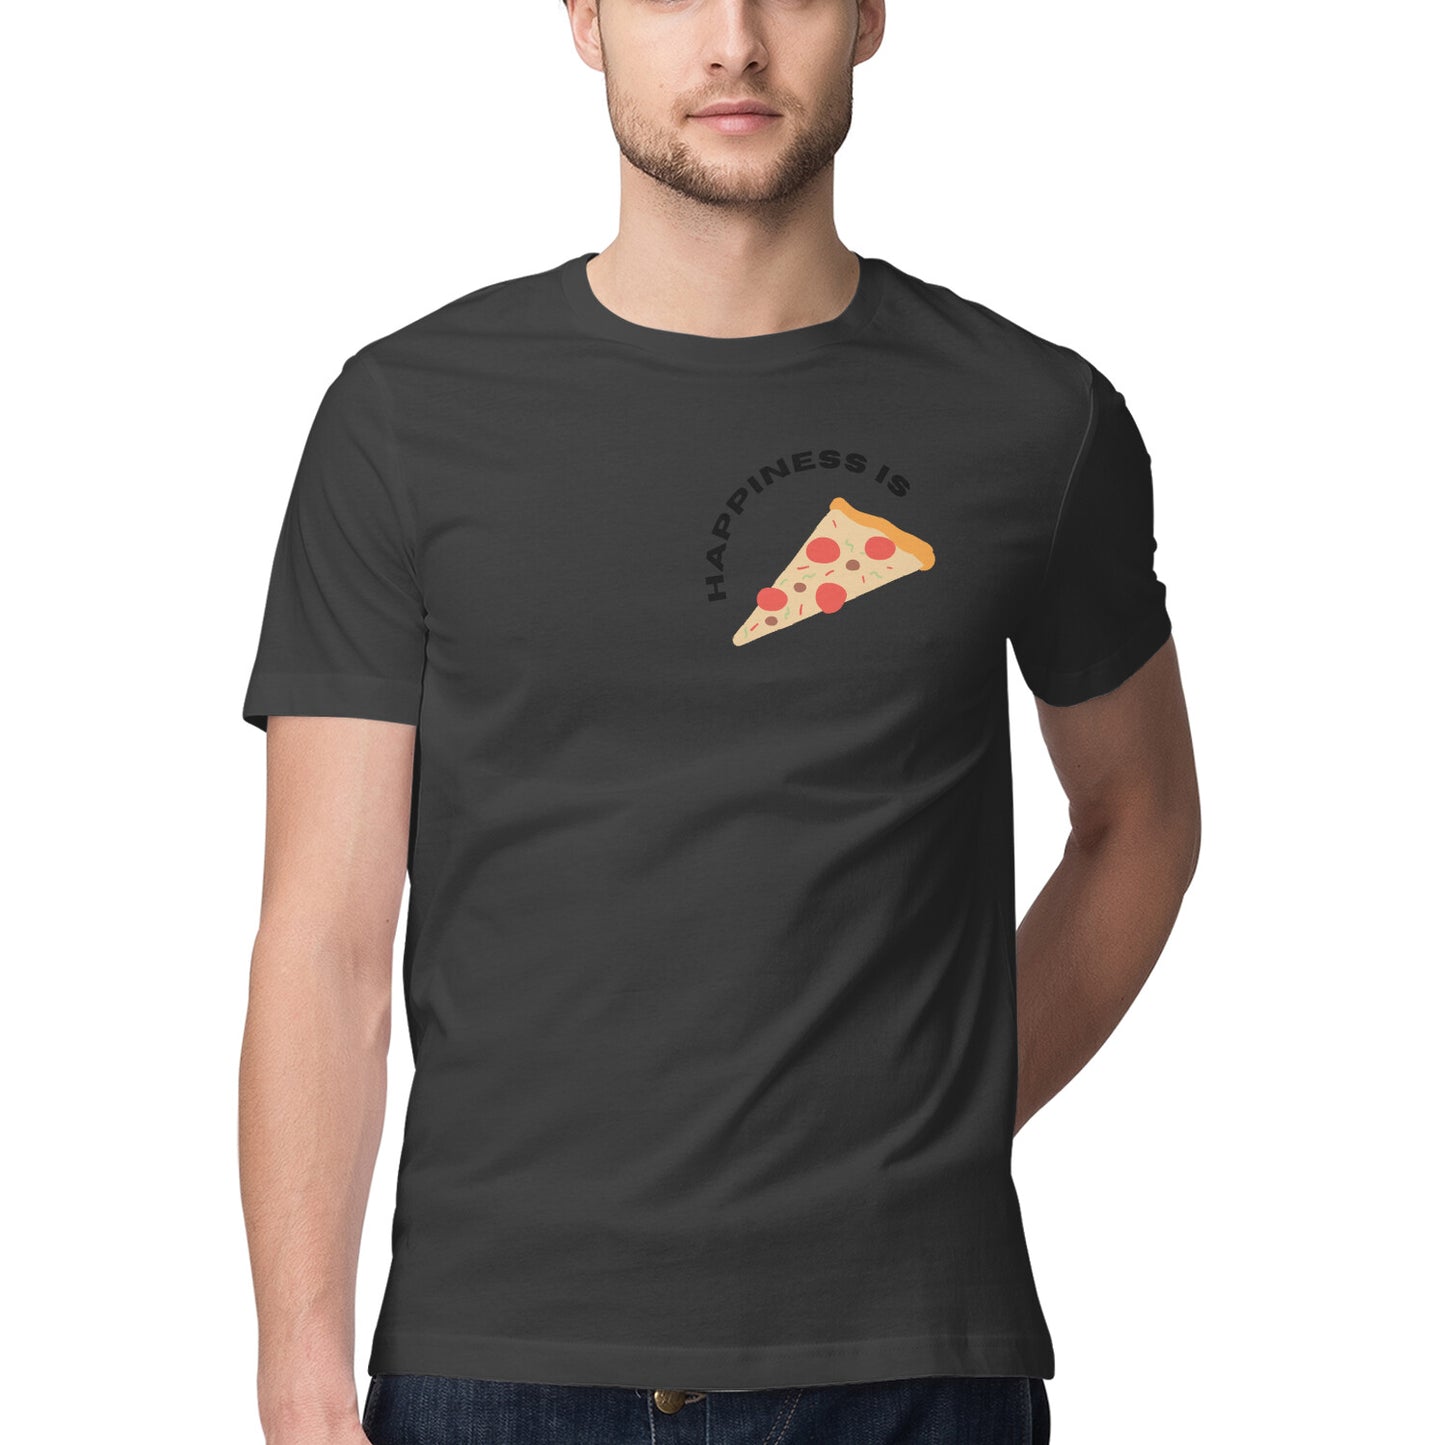 Happiness is Pizza - Unisex Tshirt